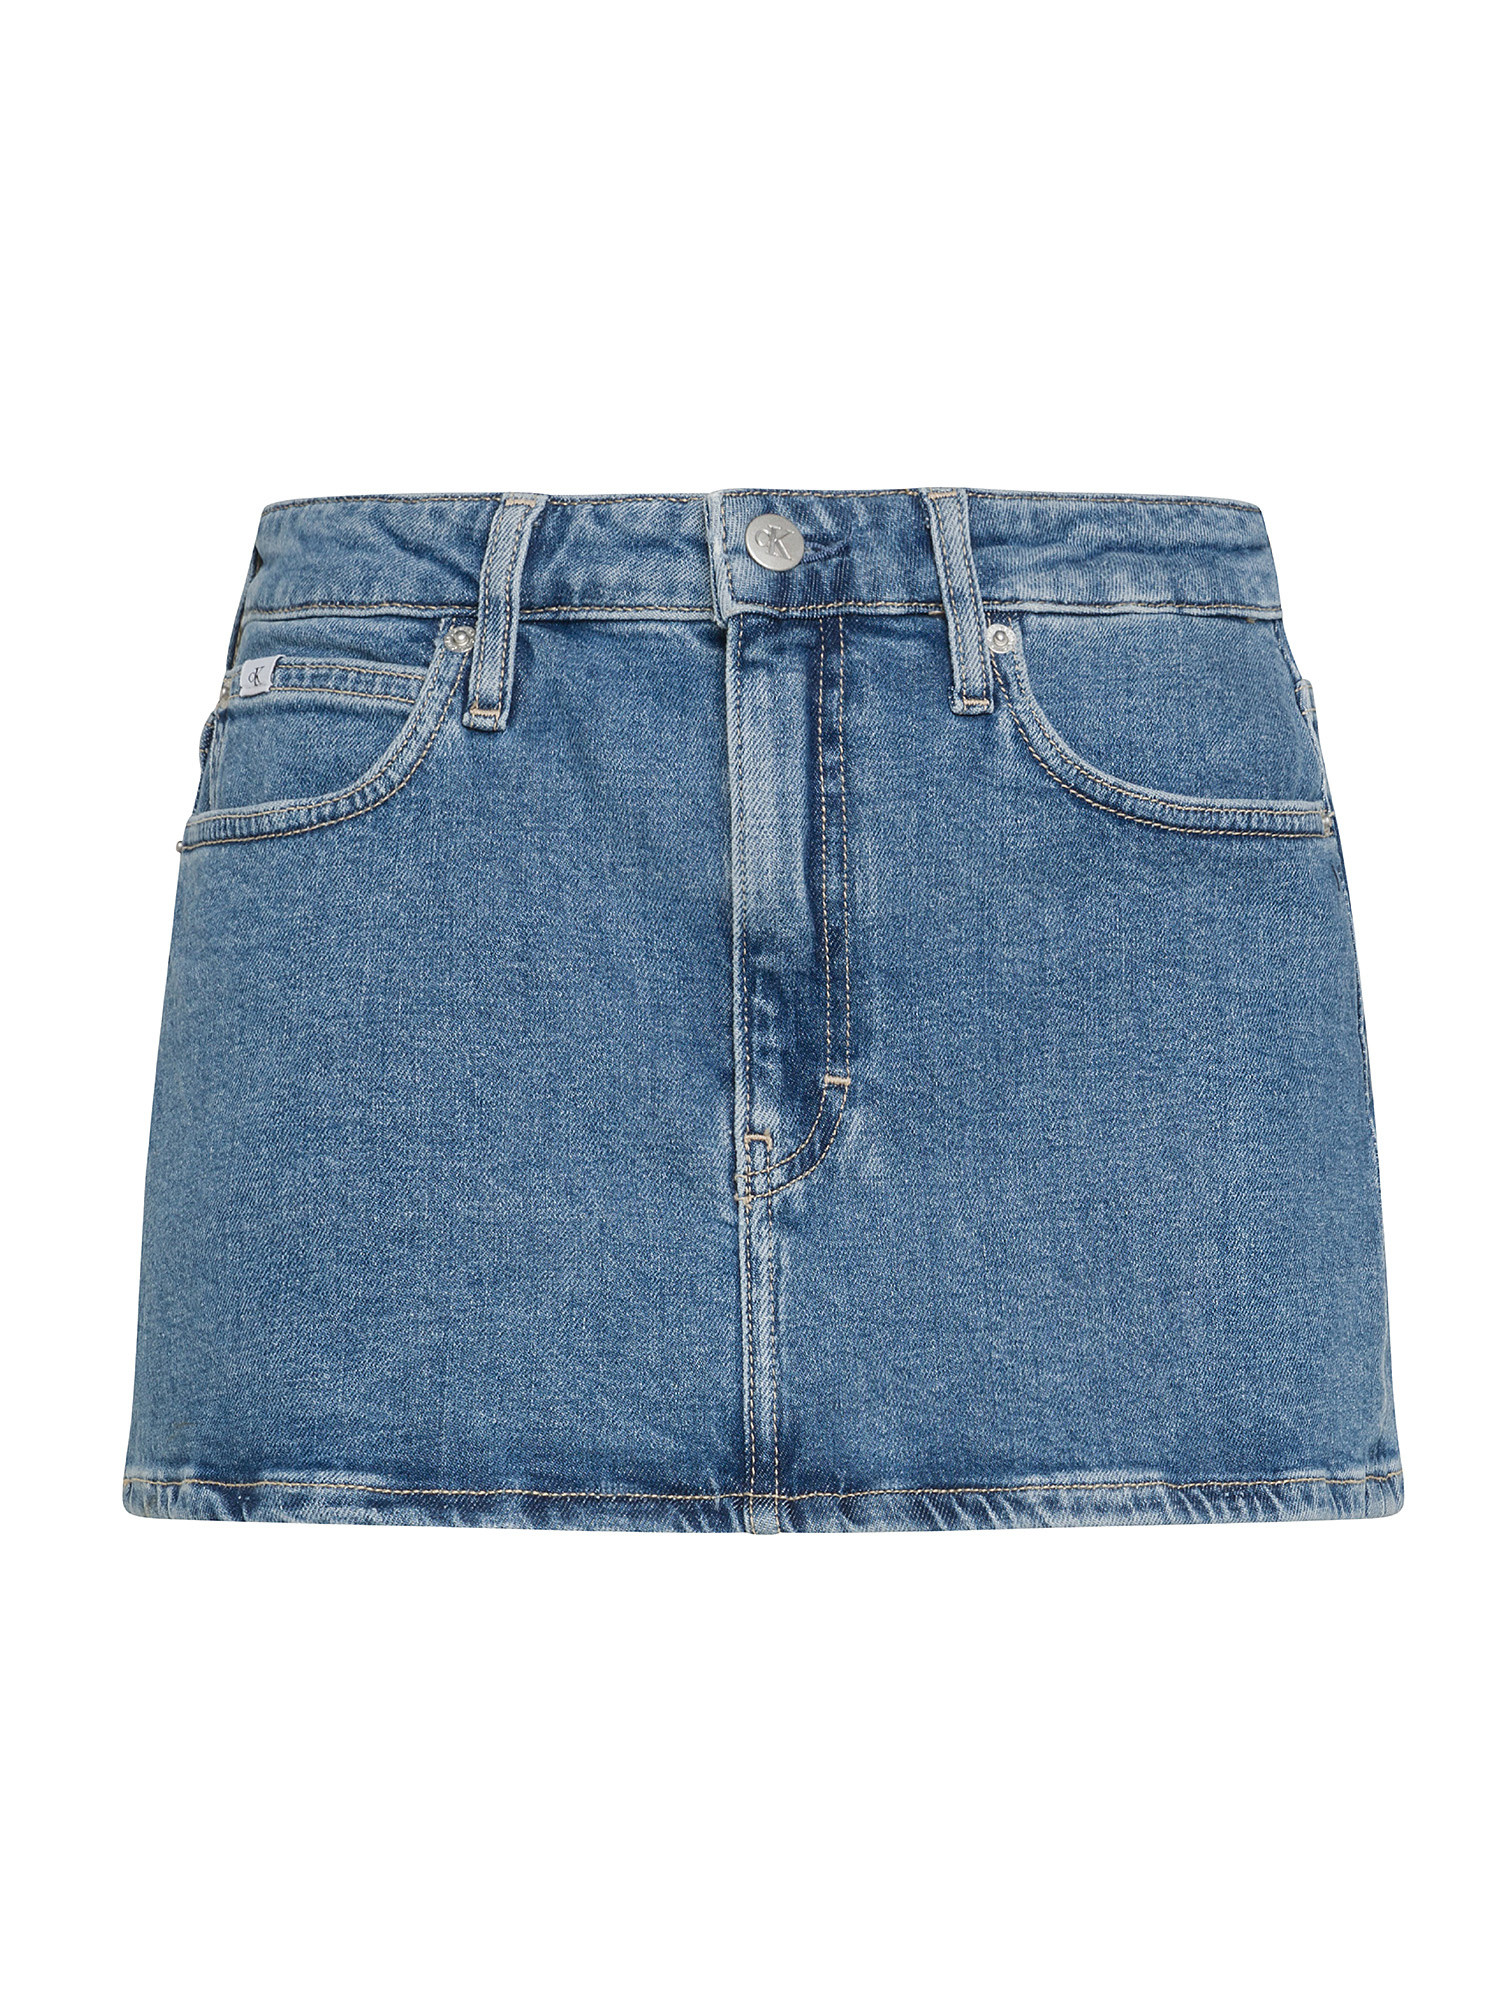 Calvin Klein Jeans - Minigonna in denim di cotone elasticizzato, Denim, large image number 0